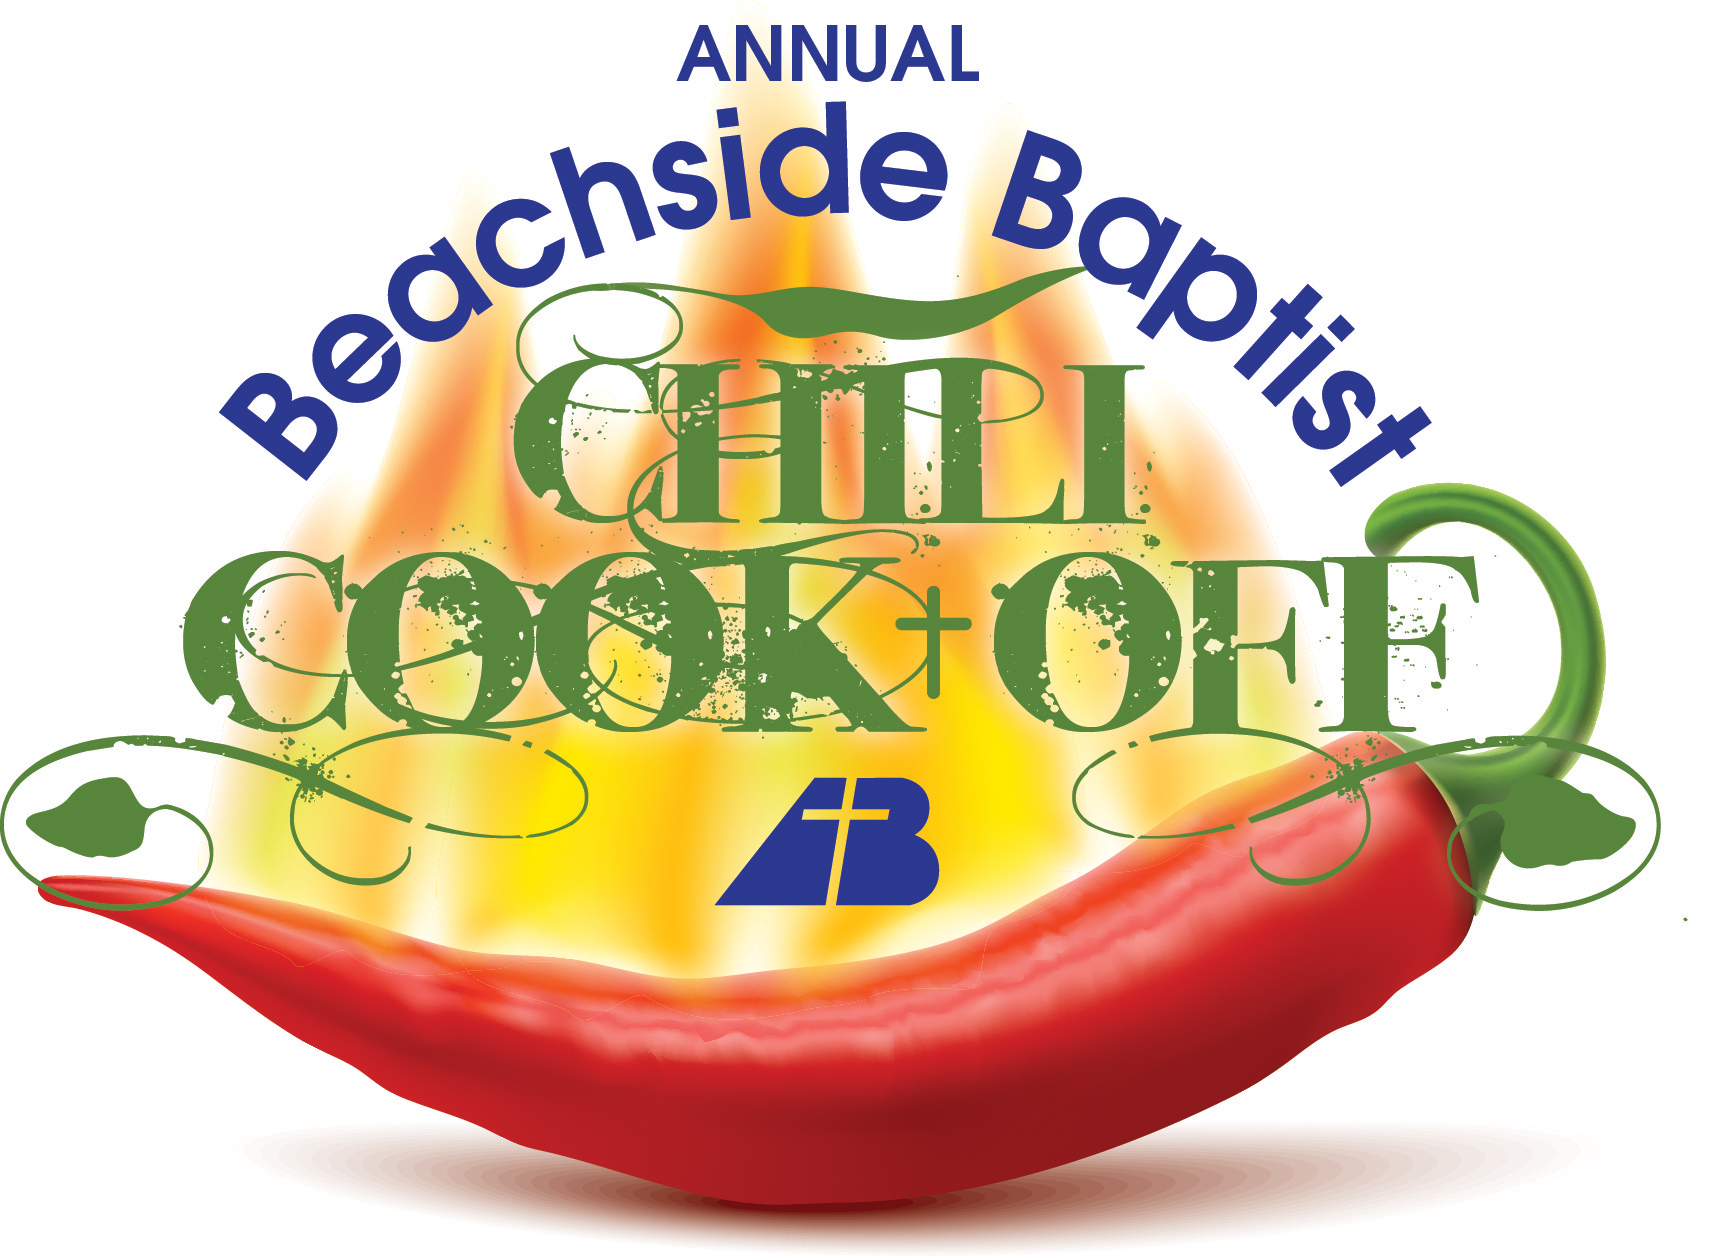 Beachside Baptist Chili Cook-off